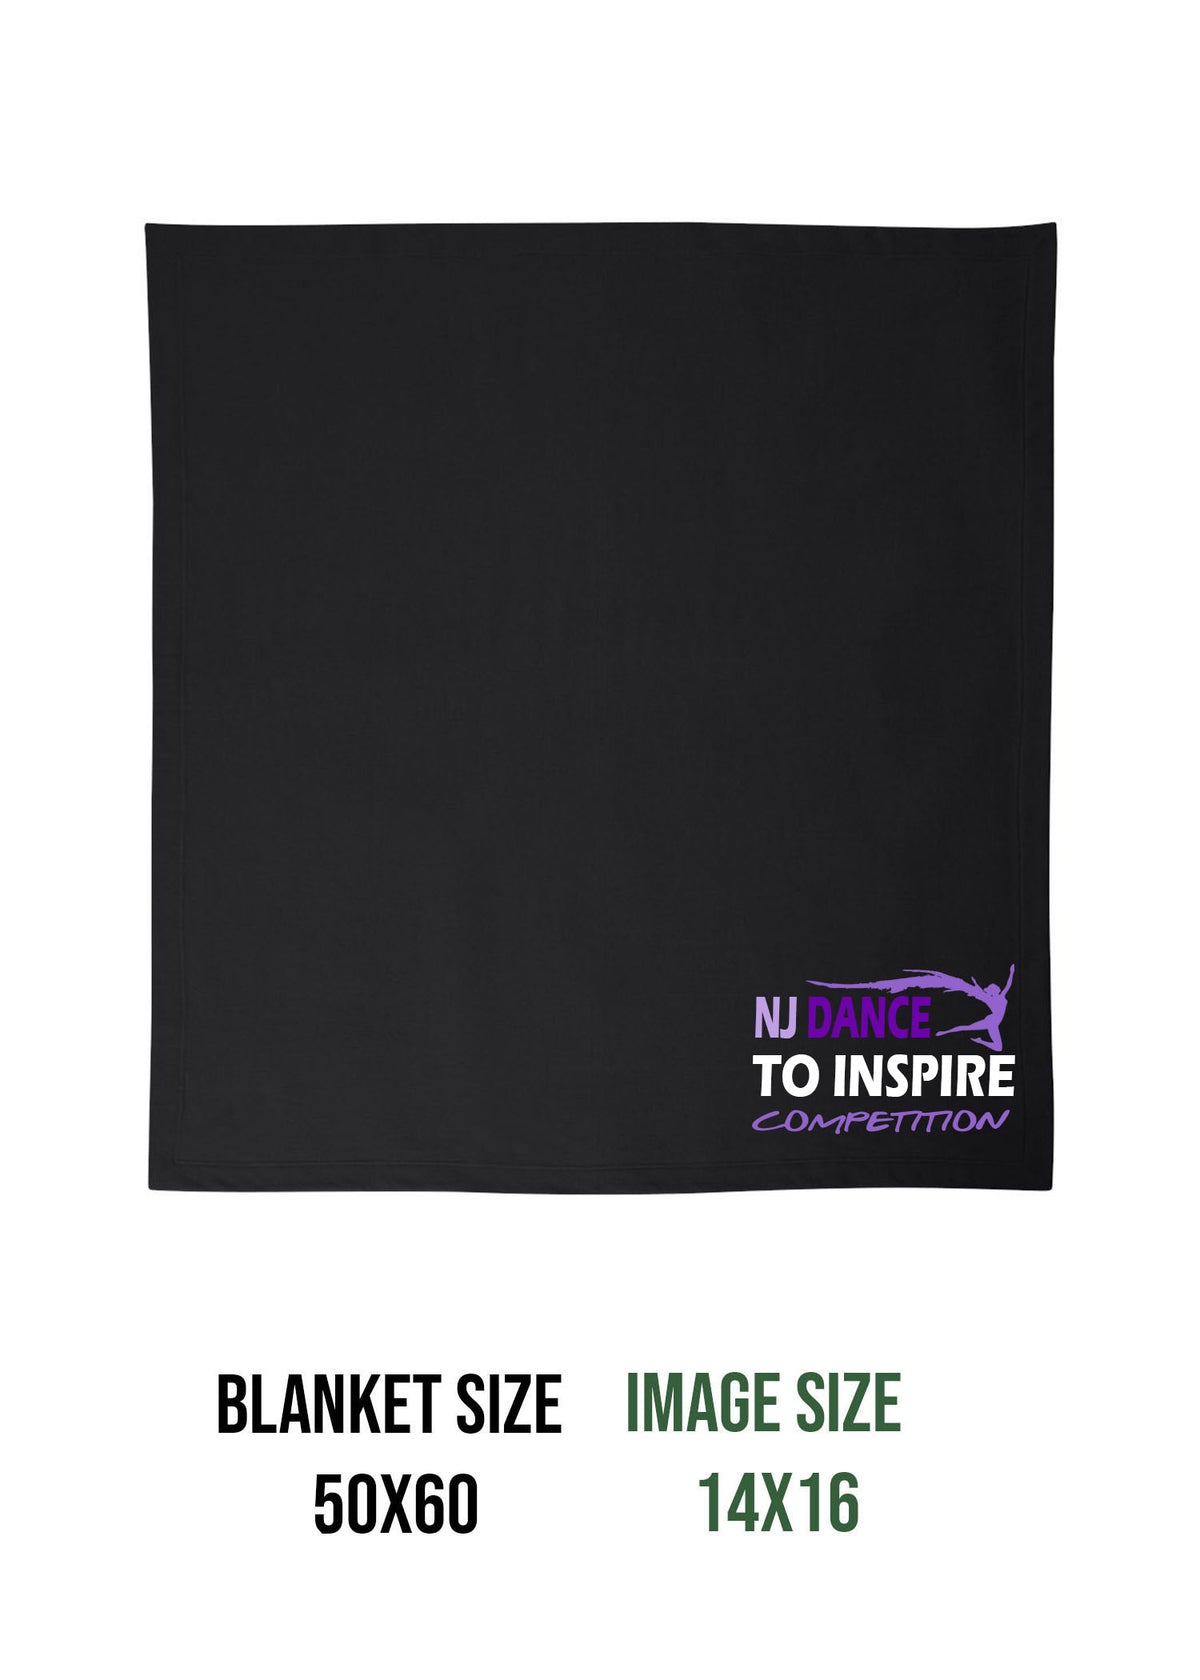 NJ Dance Design 5 Blanket